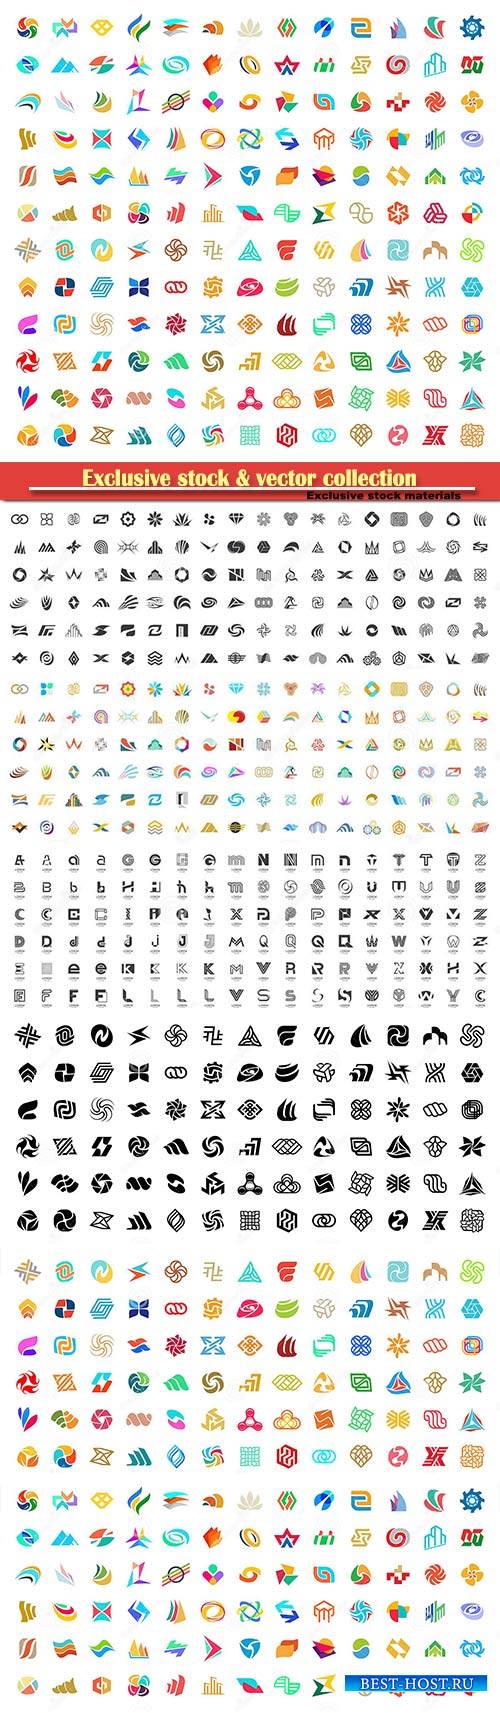 Abstract logos collection